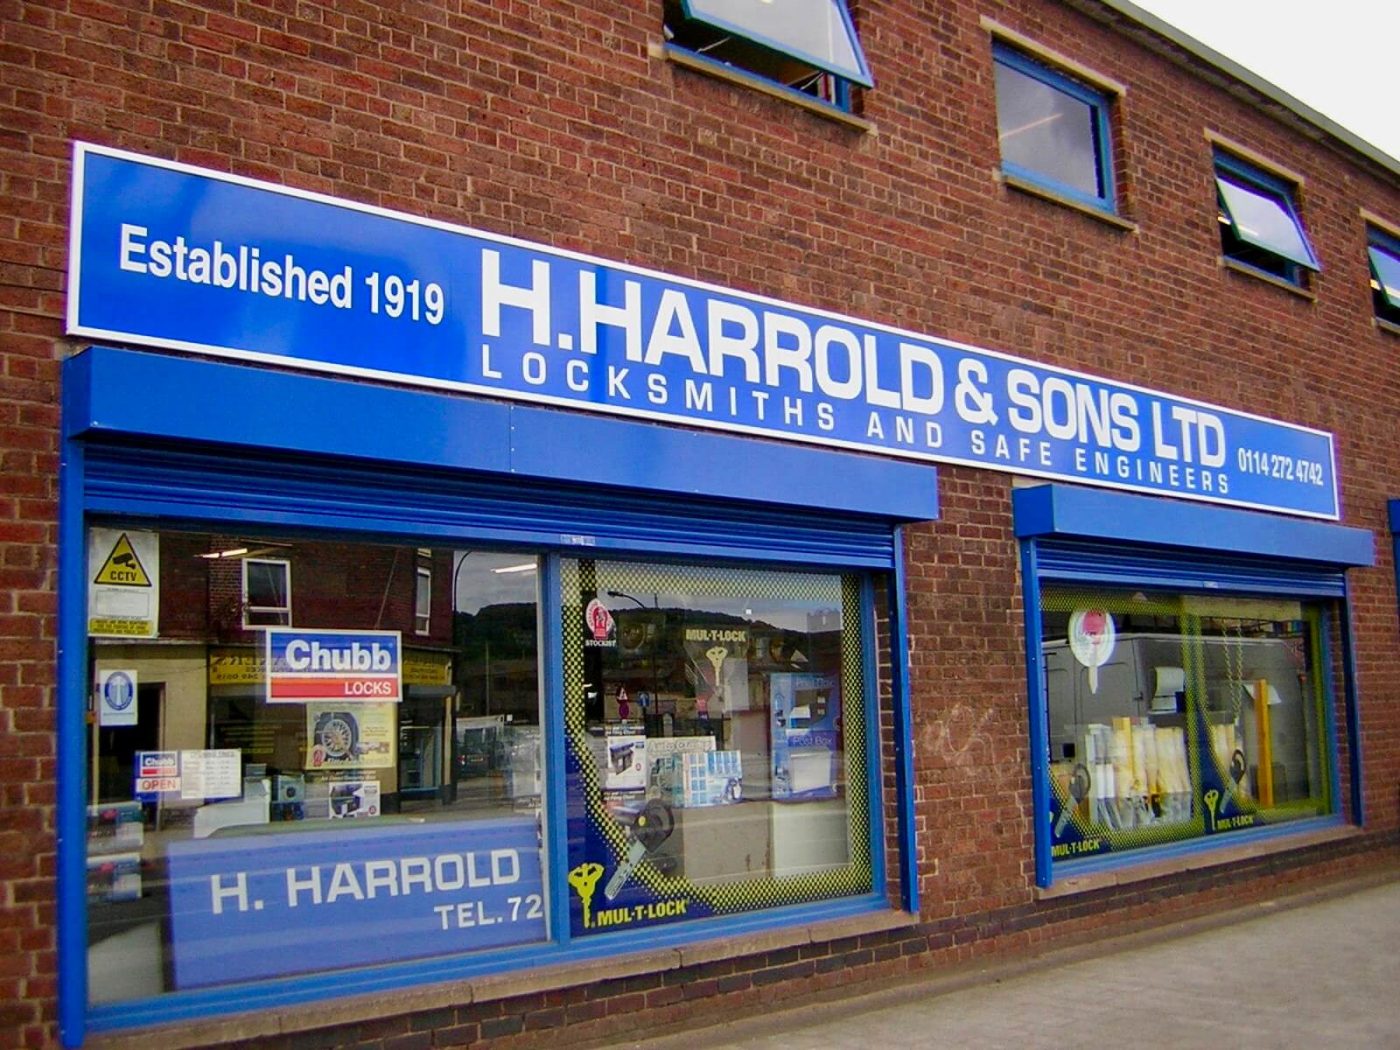 H. Harold & Sons